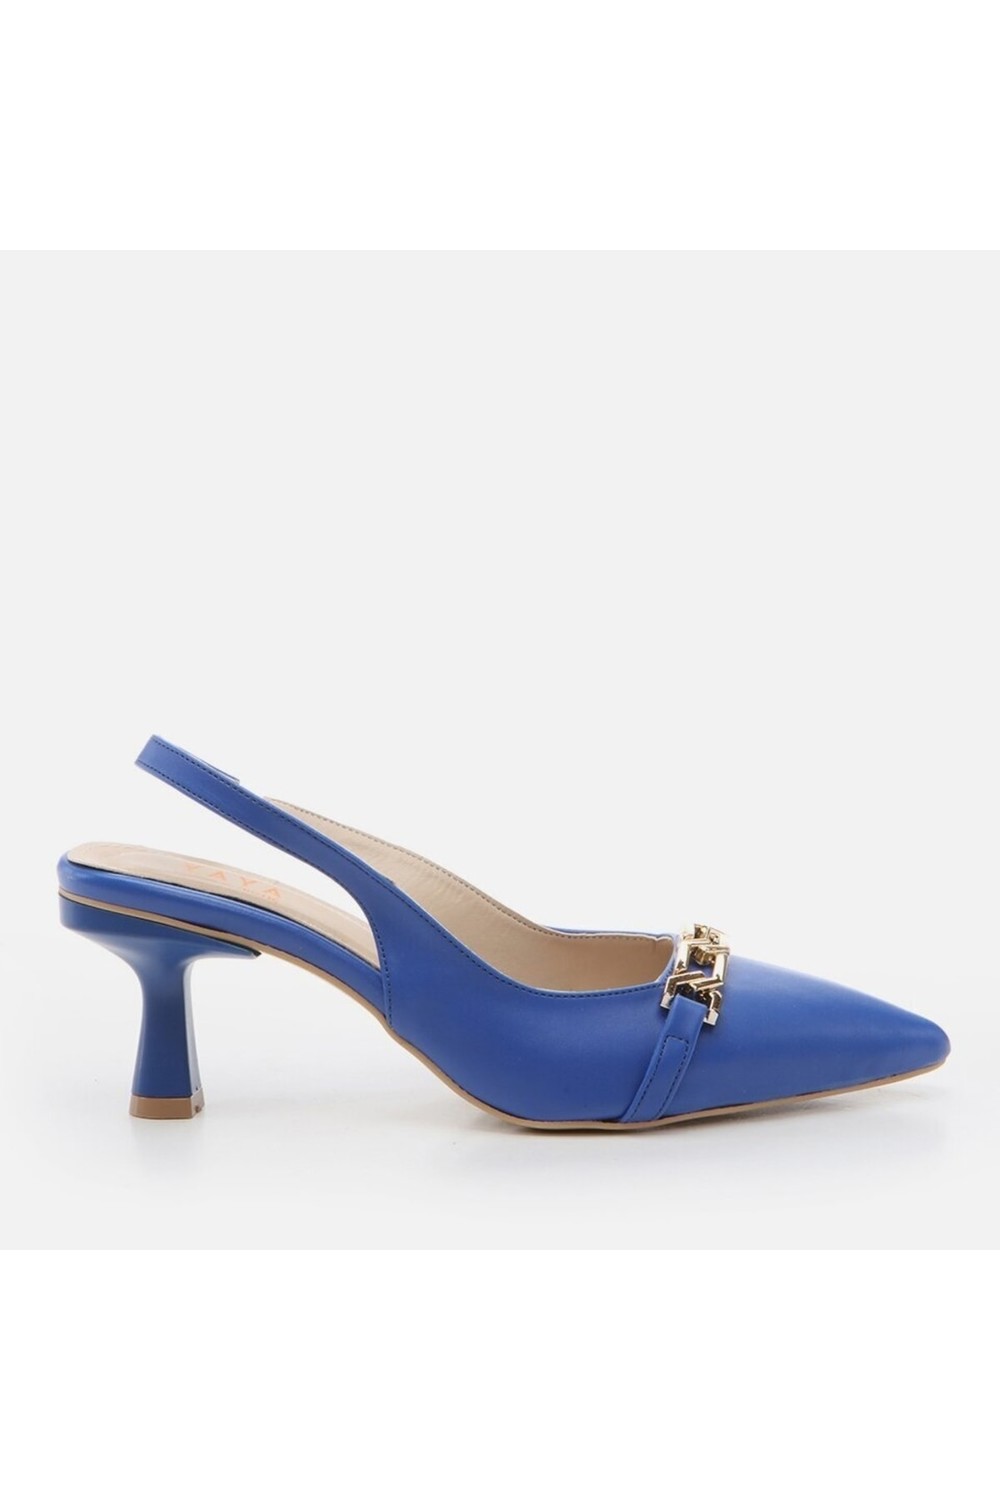 Yaya by Hotiç High Heels - Dark blue - Stiletto Heels